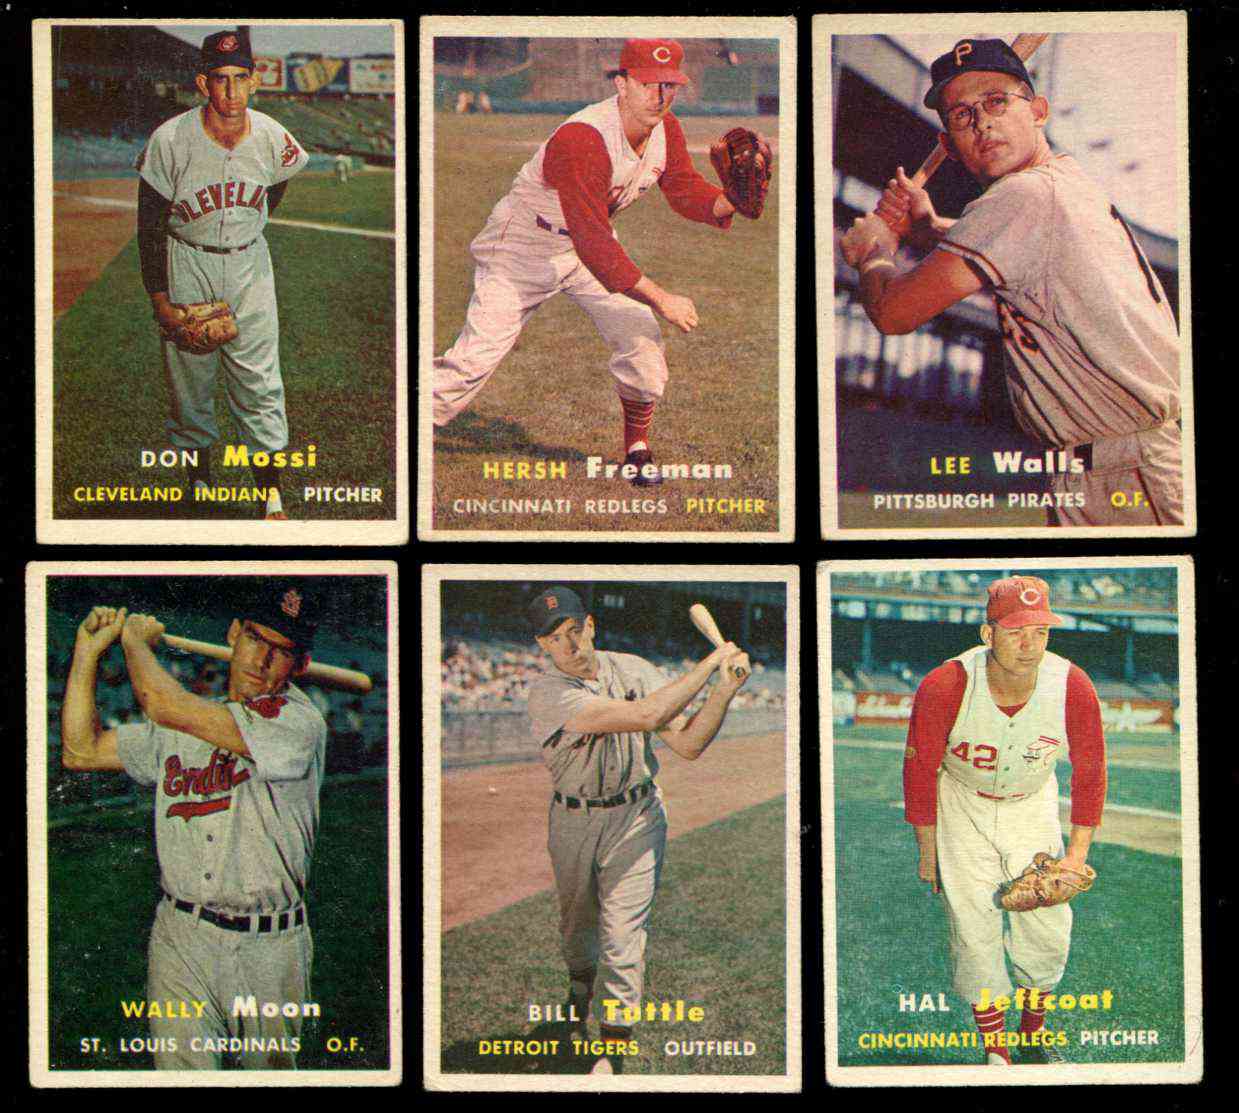 1957 Topps Baseball #307 Dick Hall - Pitsburgh Pirates - CSG 6.5 Ex/NM+